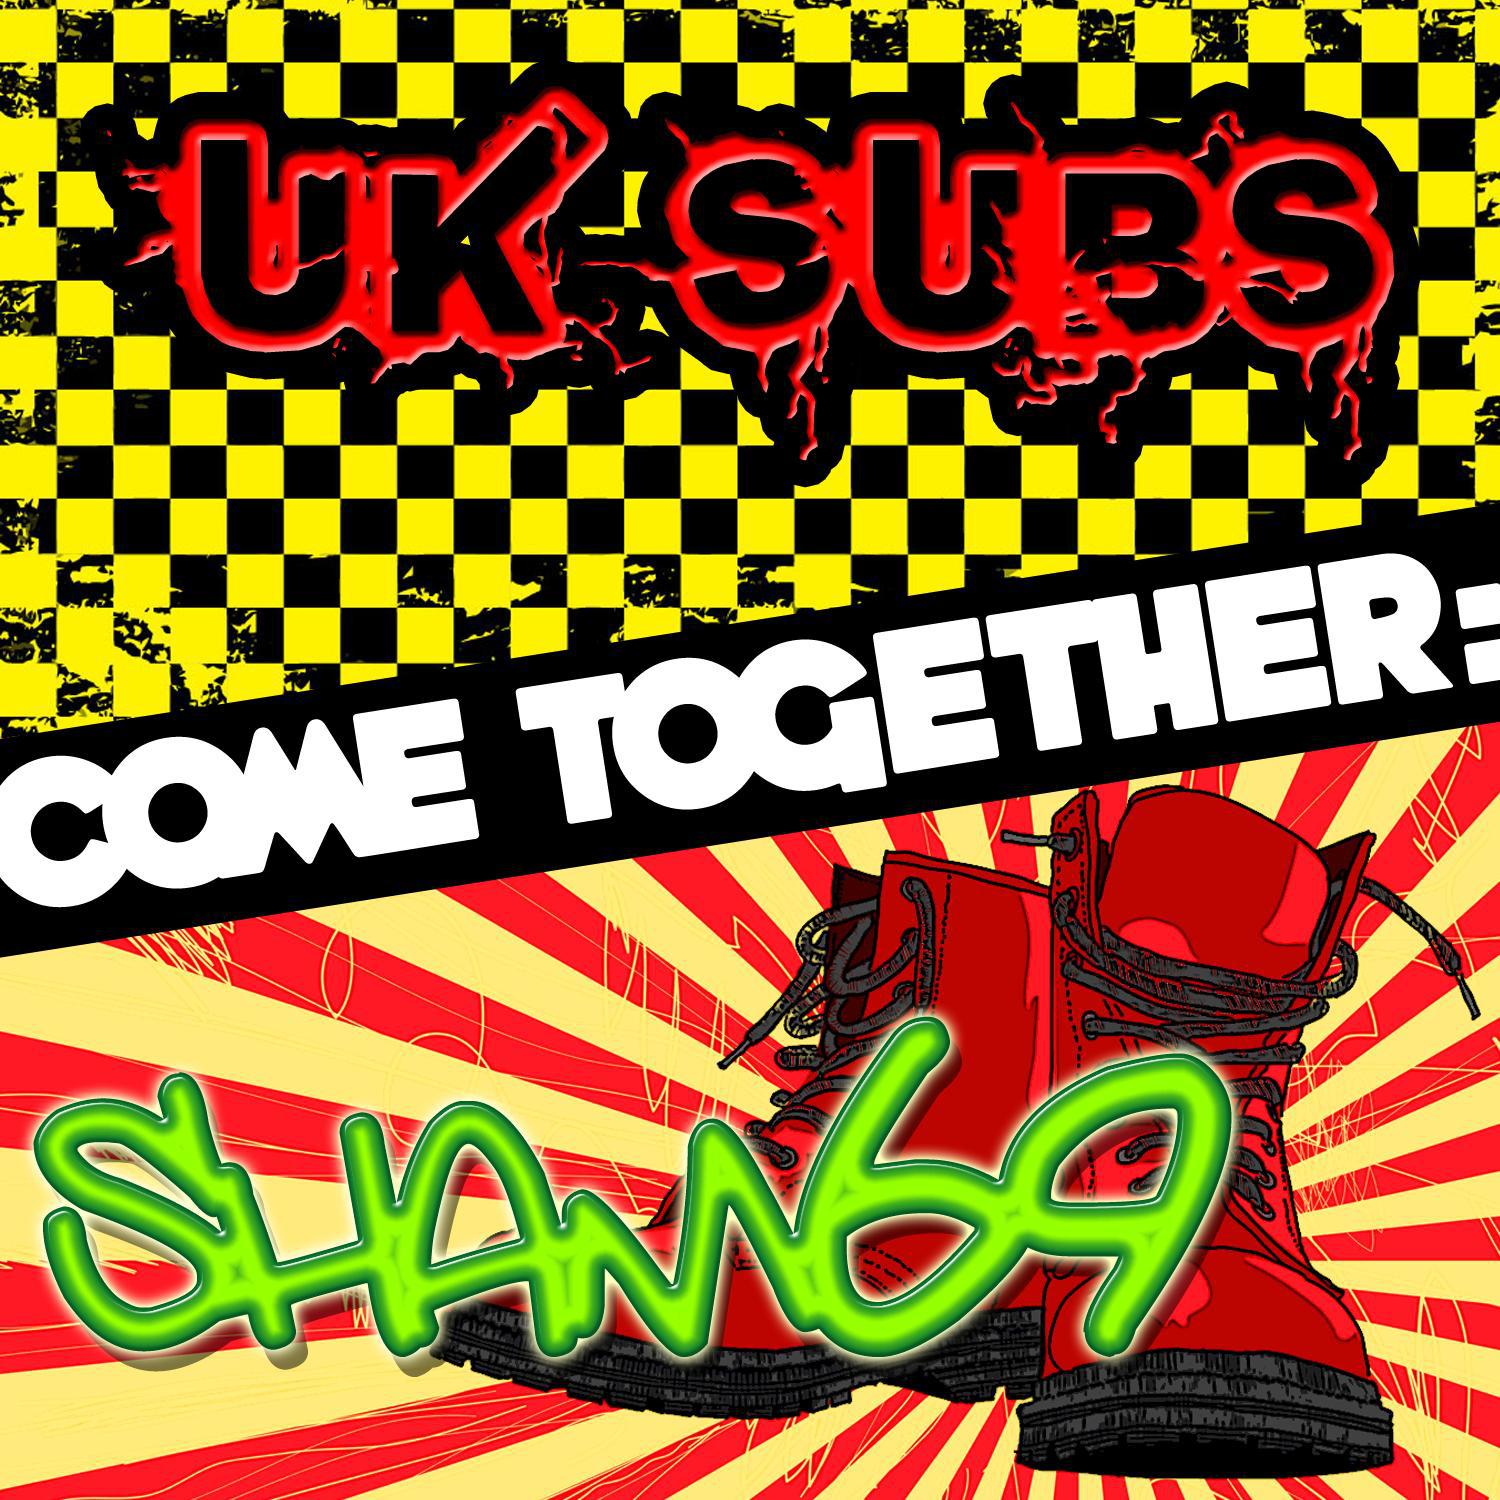 Come Together: UK Subs vs. Sham 69专辑